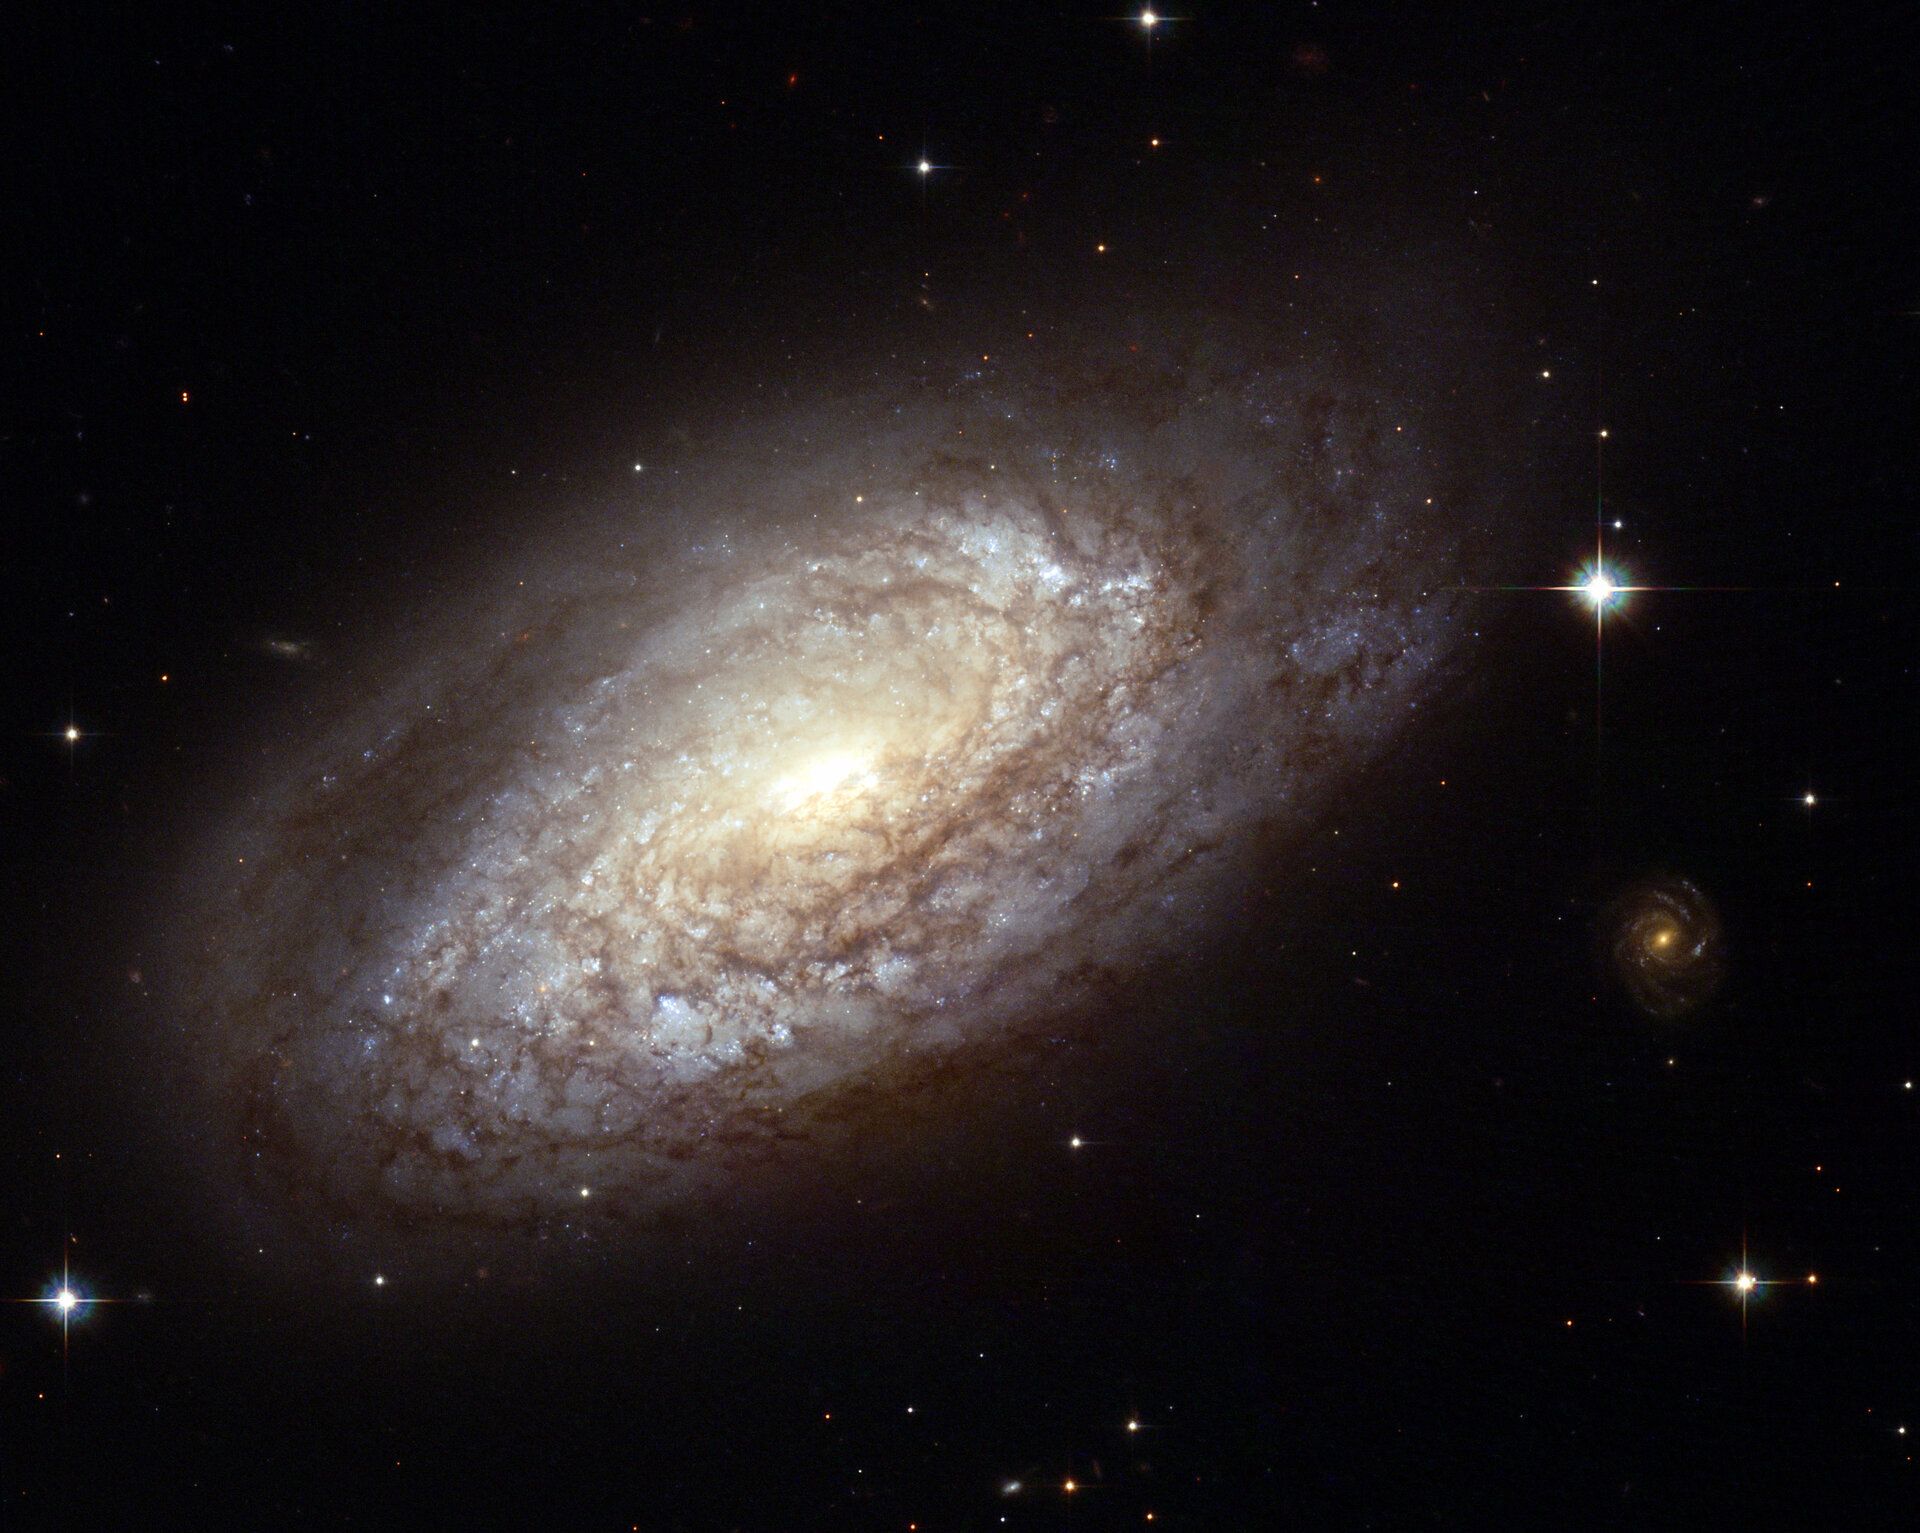 Galaxy NGC 2397